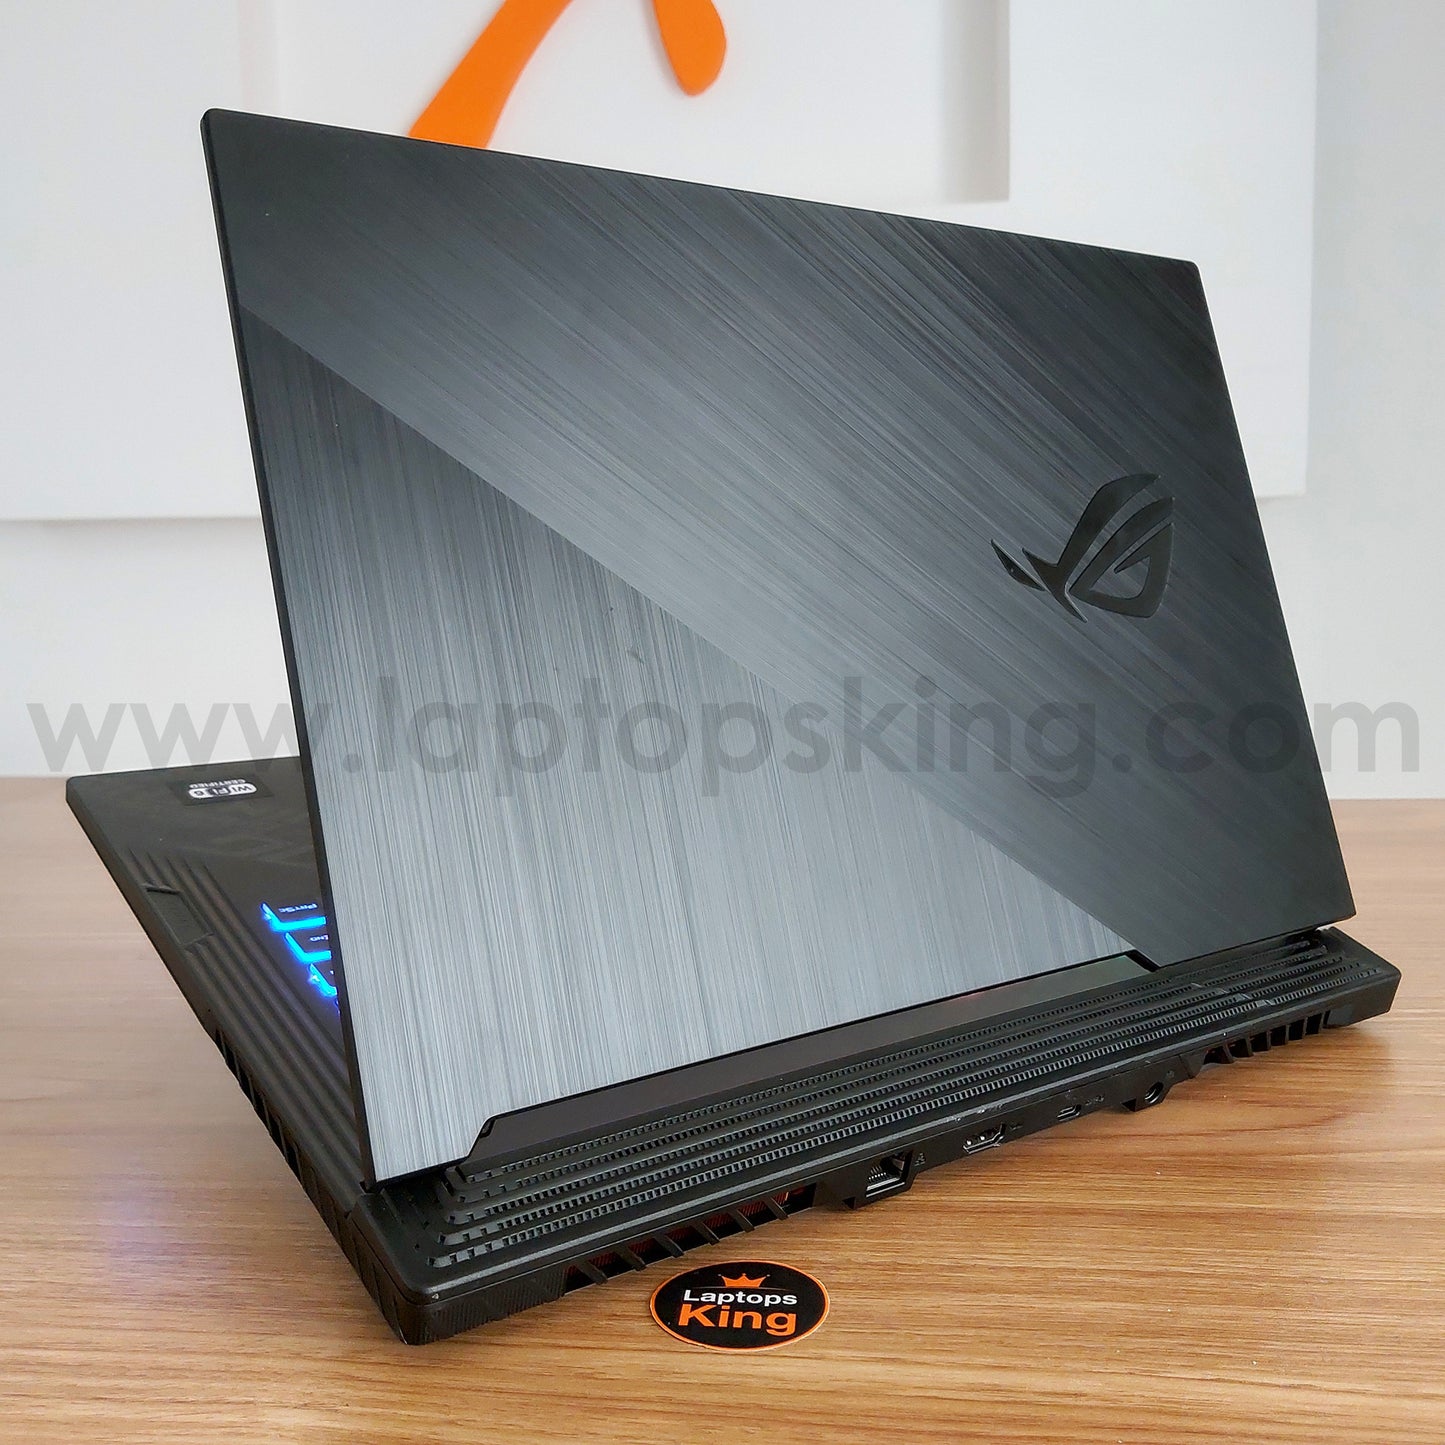 Asus Rog Strix 512GL i7-10750H RTX 2070 144Hz Gaming Laptop (Open Box)